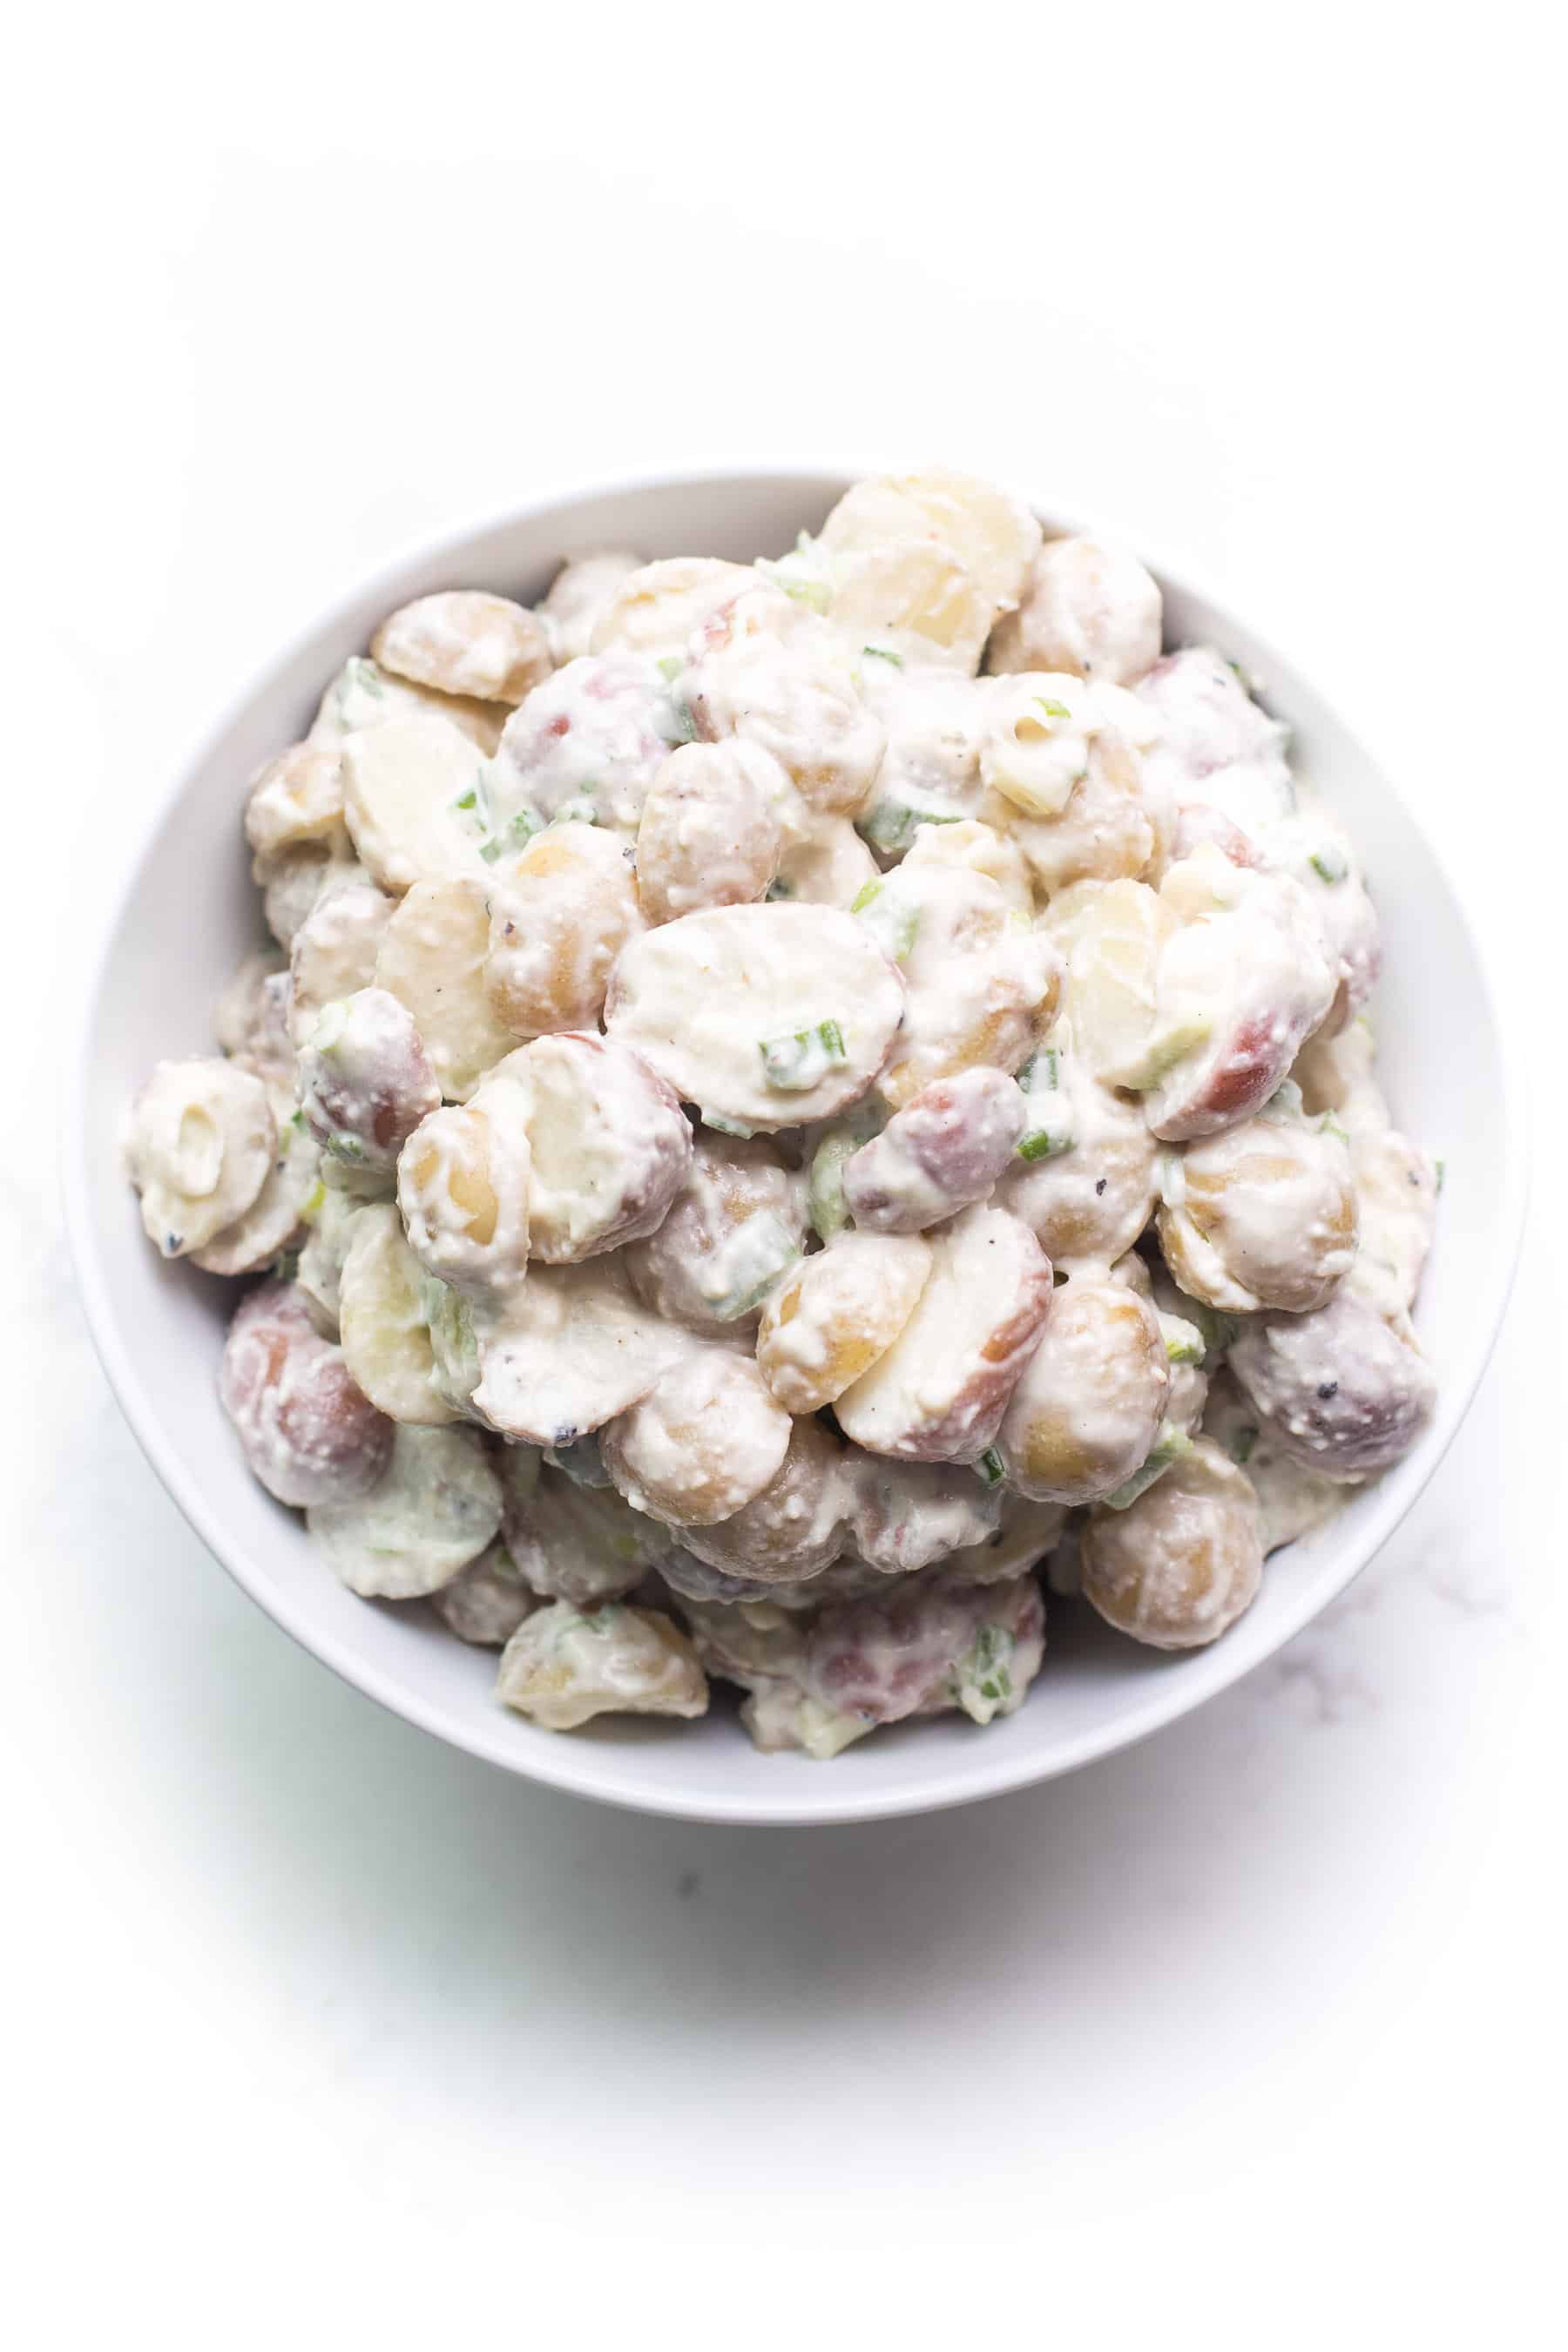 potato salad in a white bowl on a white background